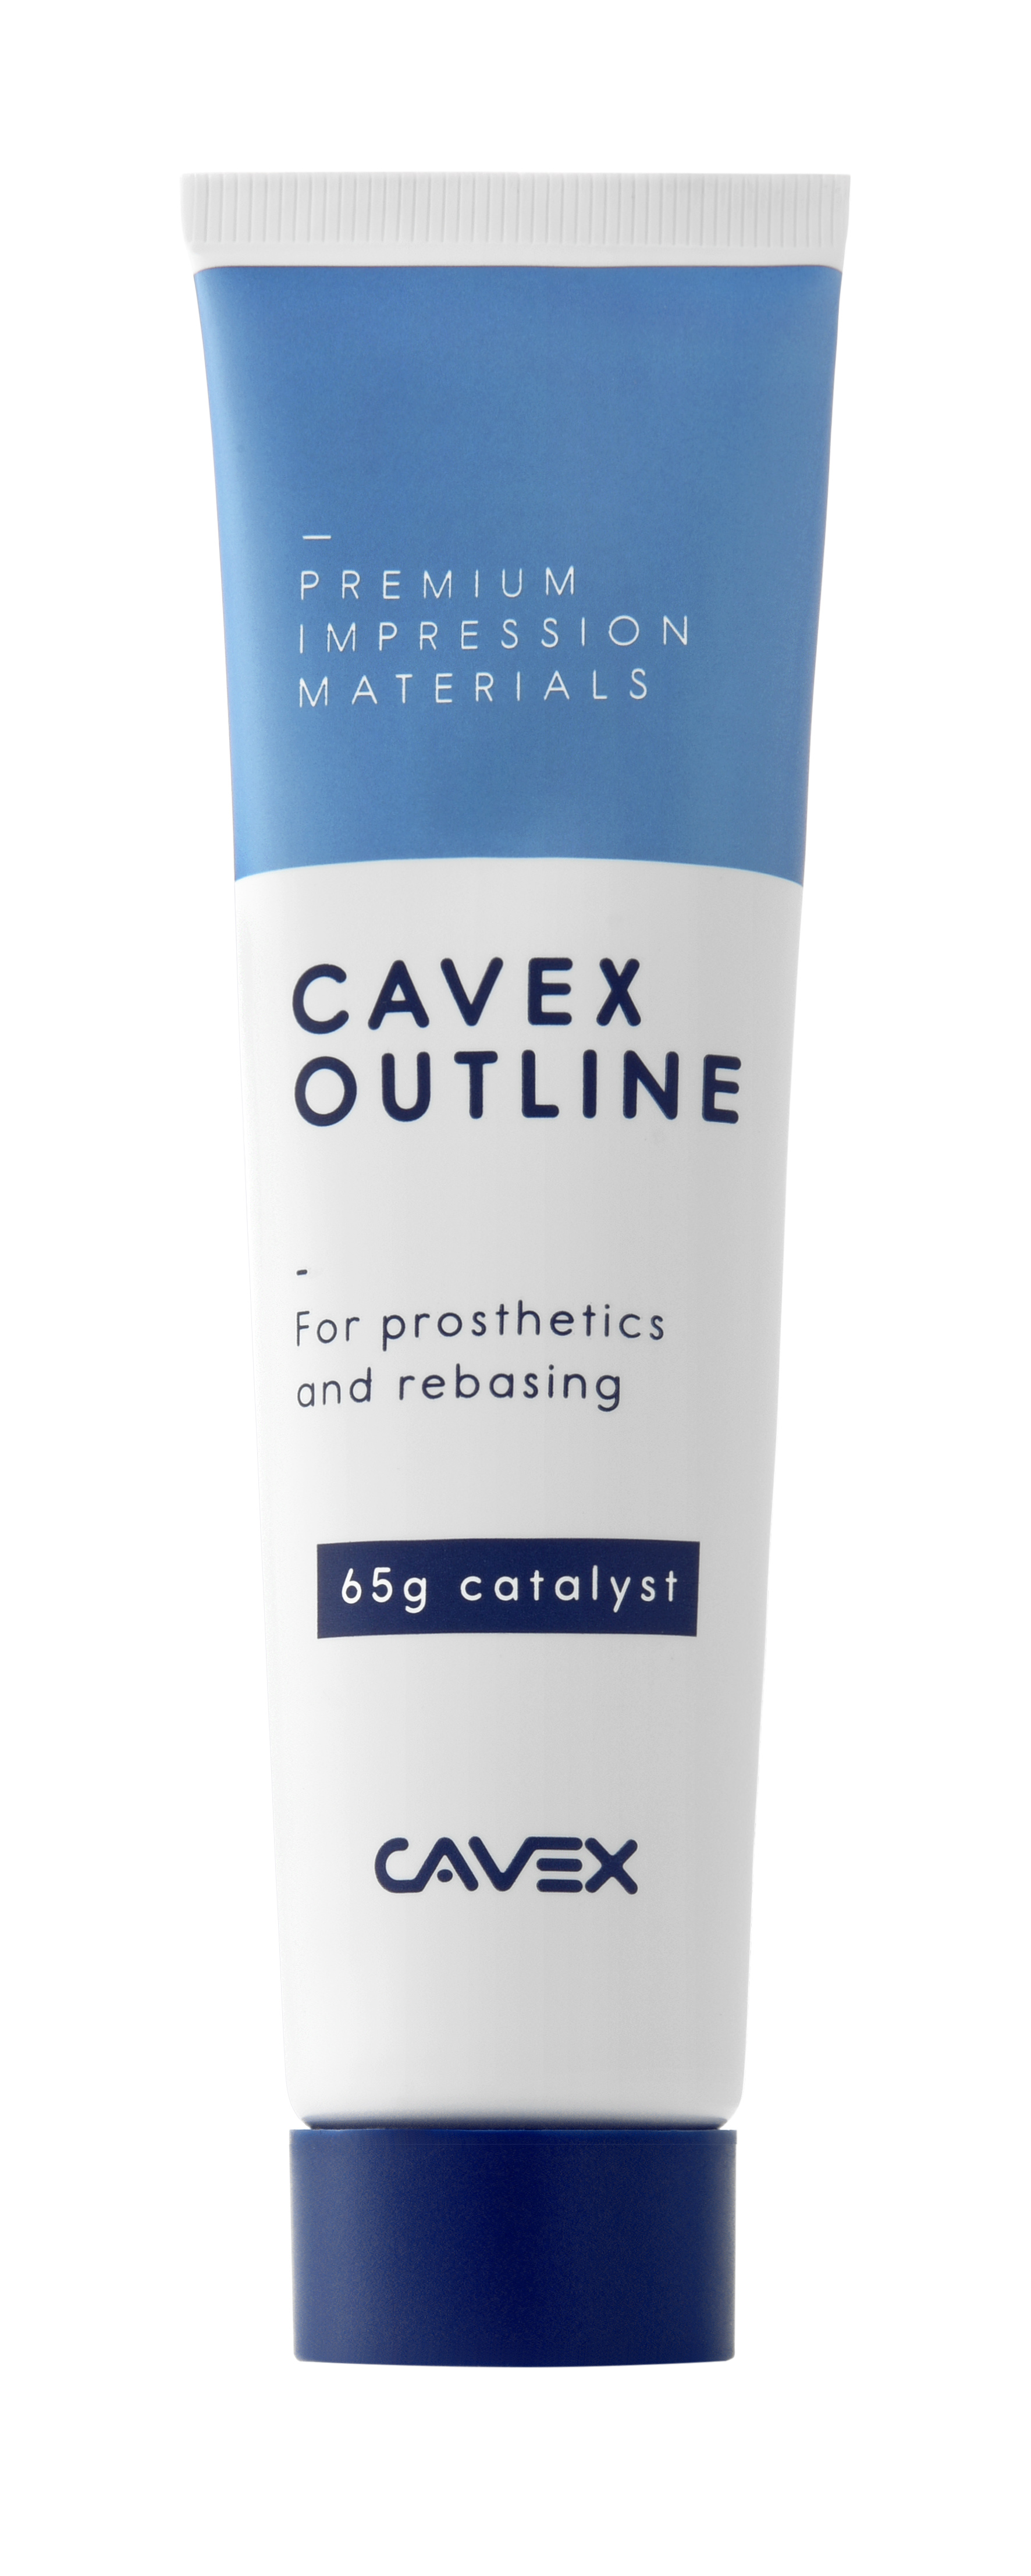 Cavex Outline